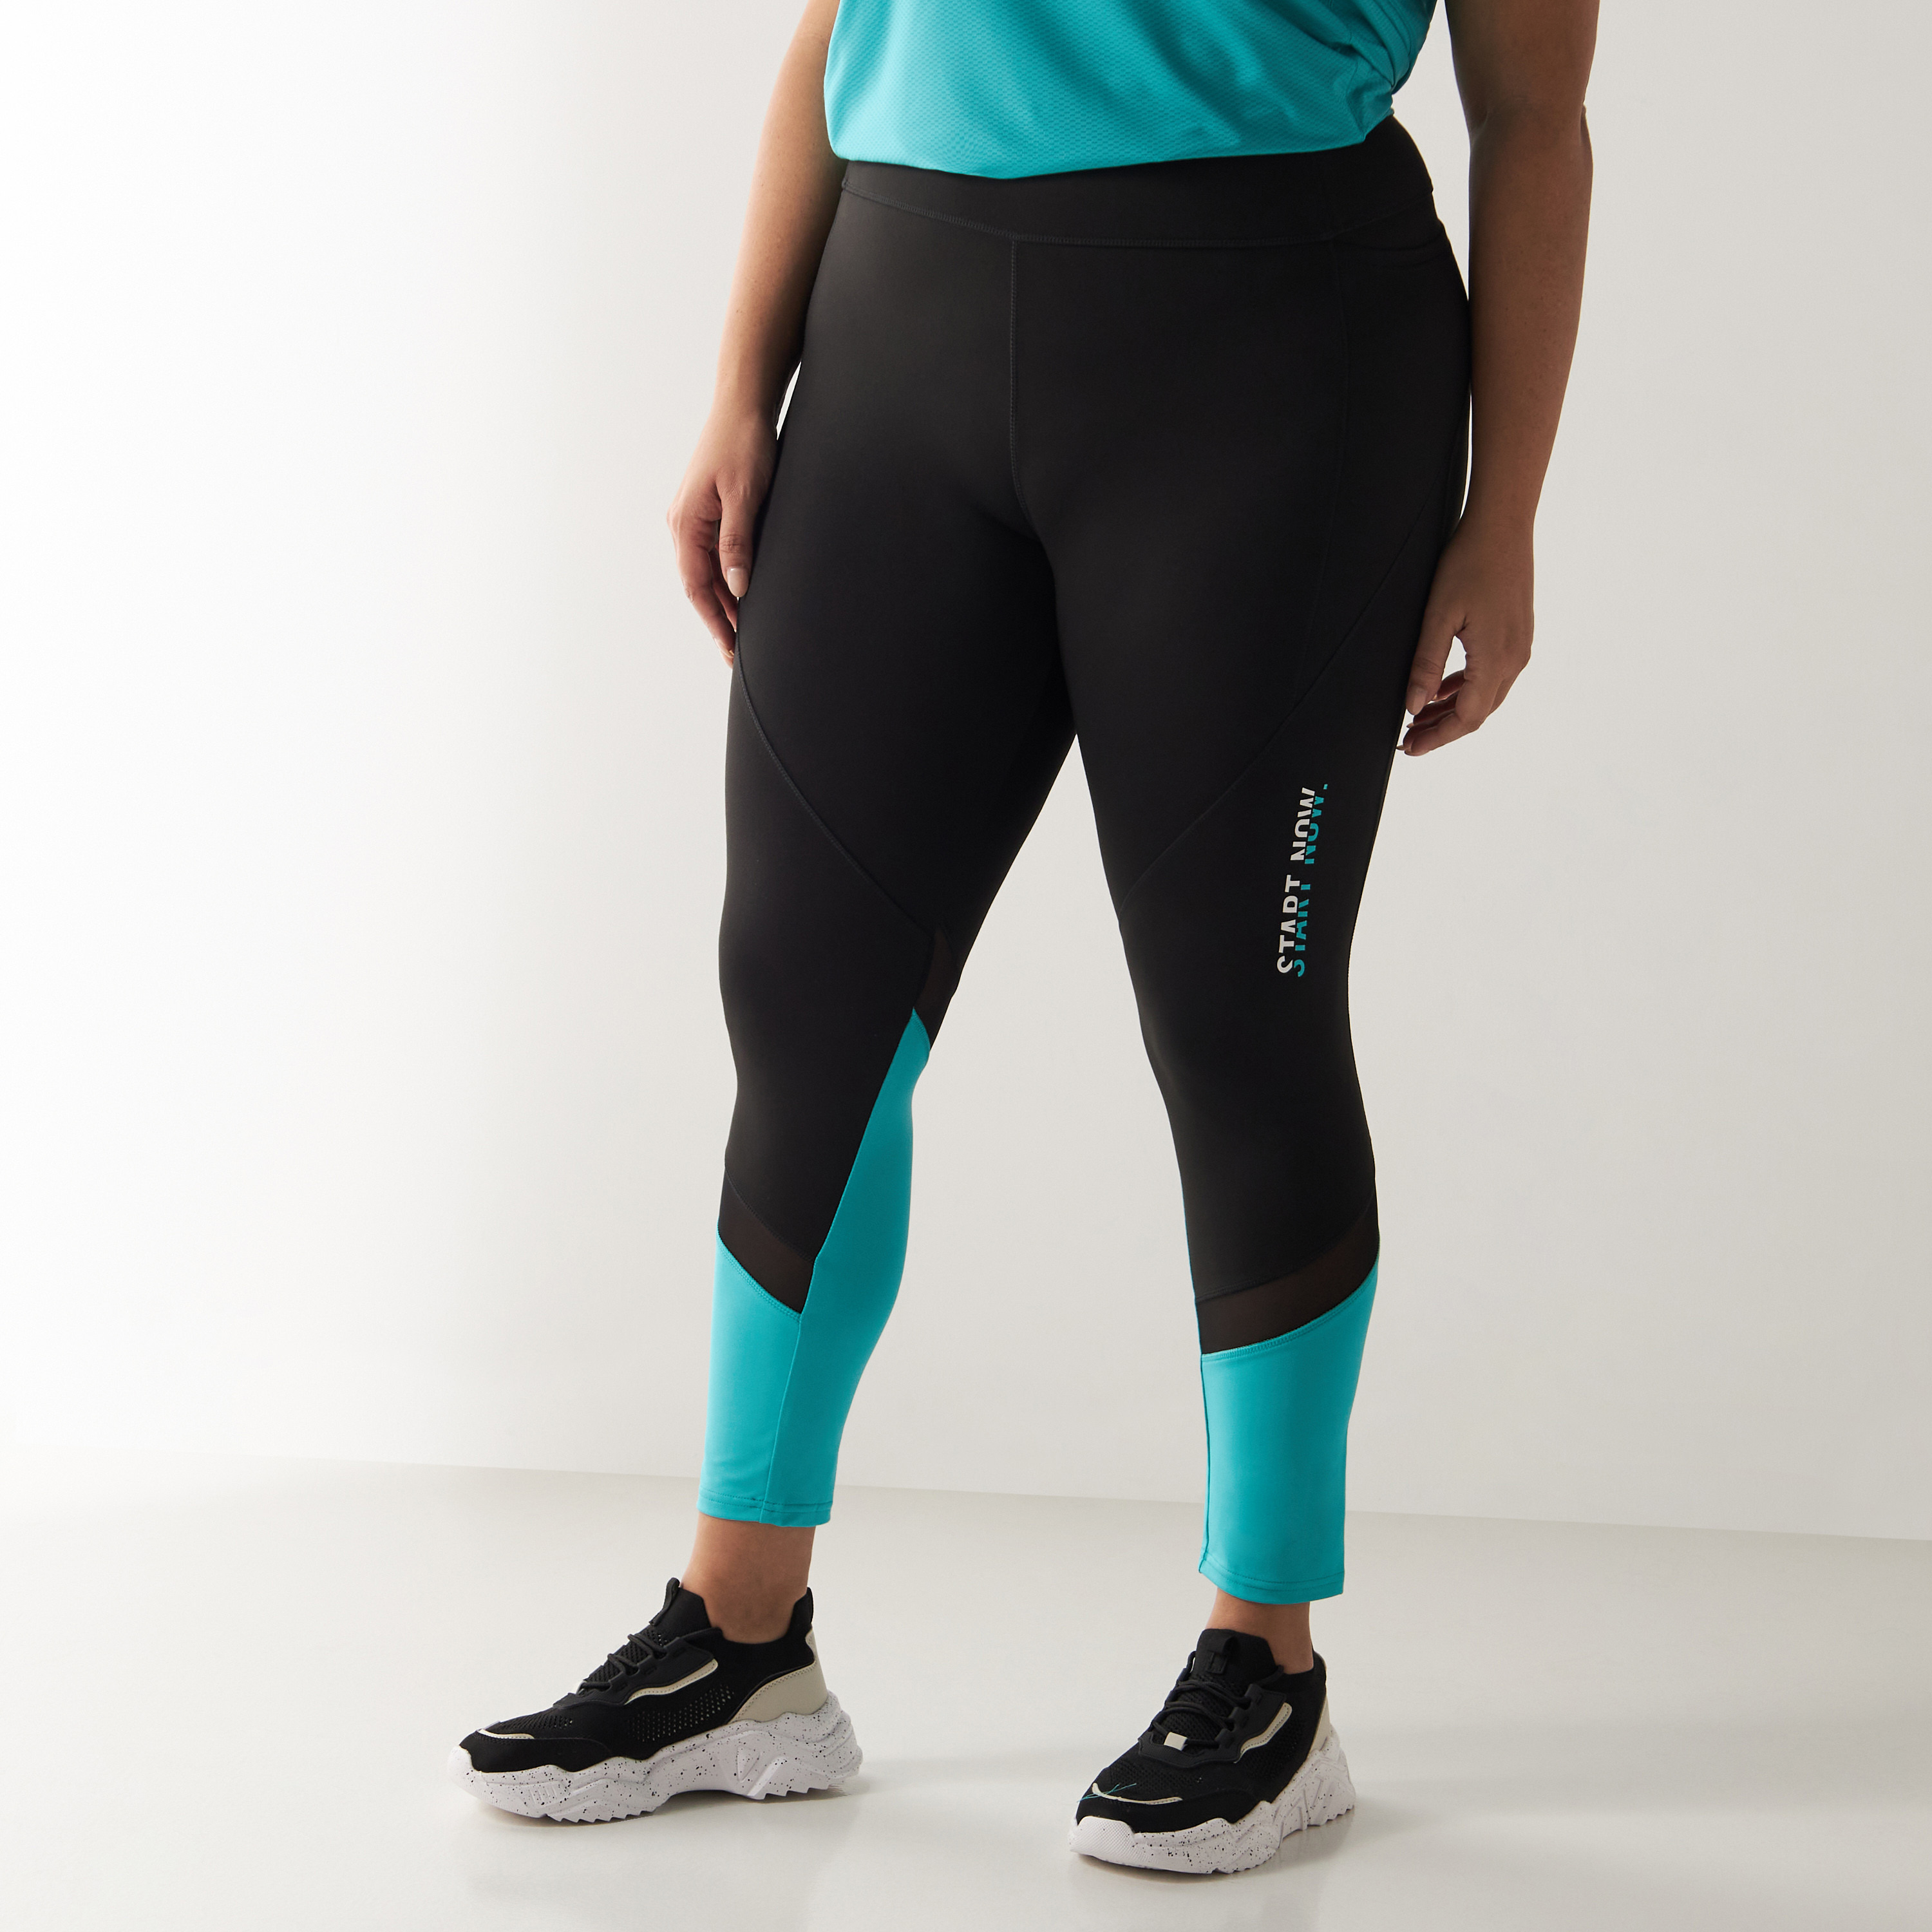 Buy ROMWE Girl's Geo Print Mesh High Waist Leggings Tights Skinny Yoga  Pants Runing Jogger Pants Black 6Y at Amazon.in